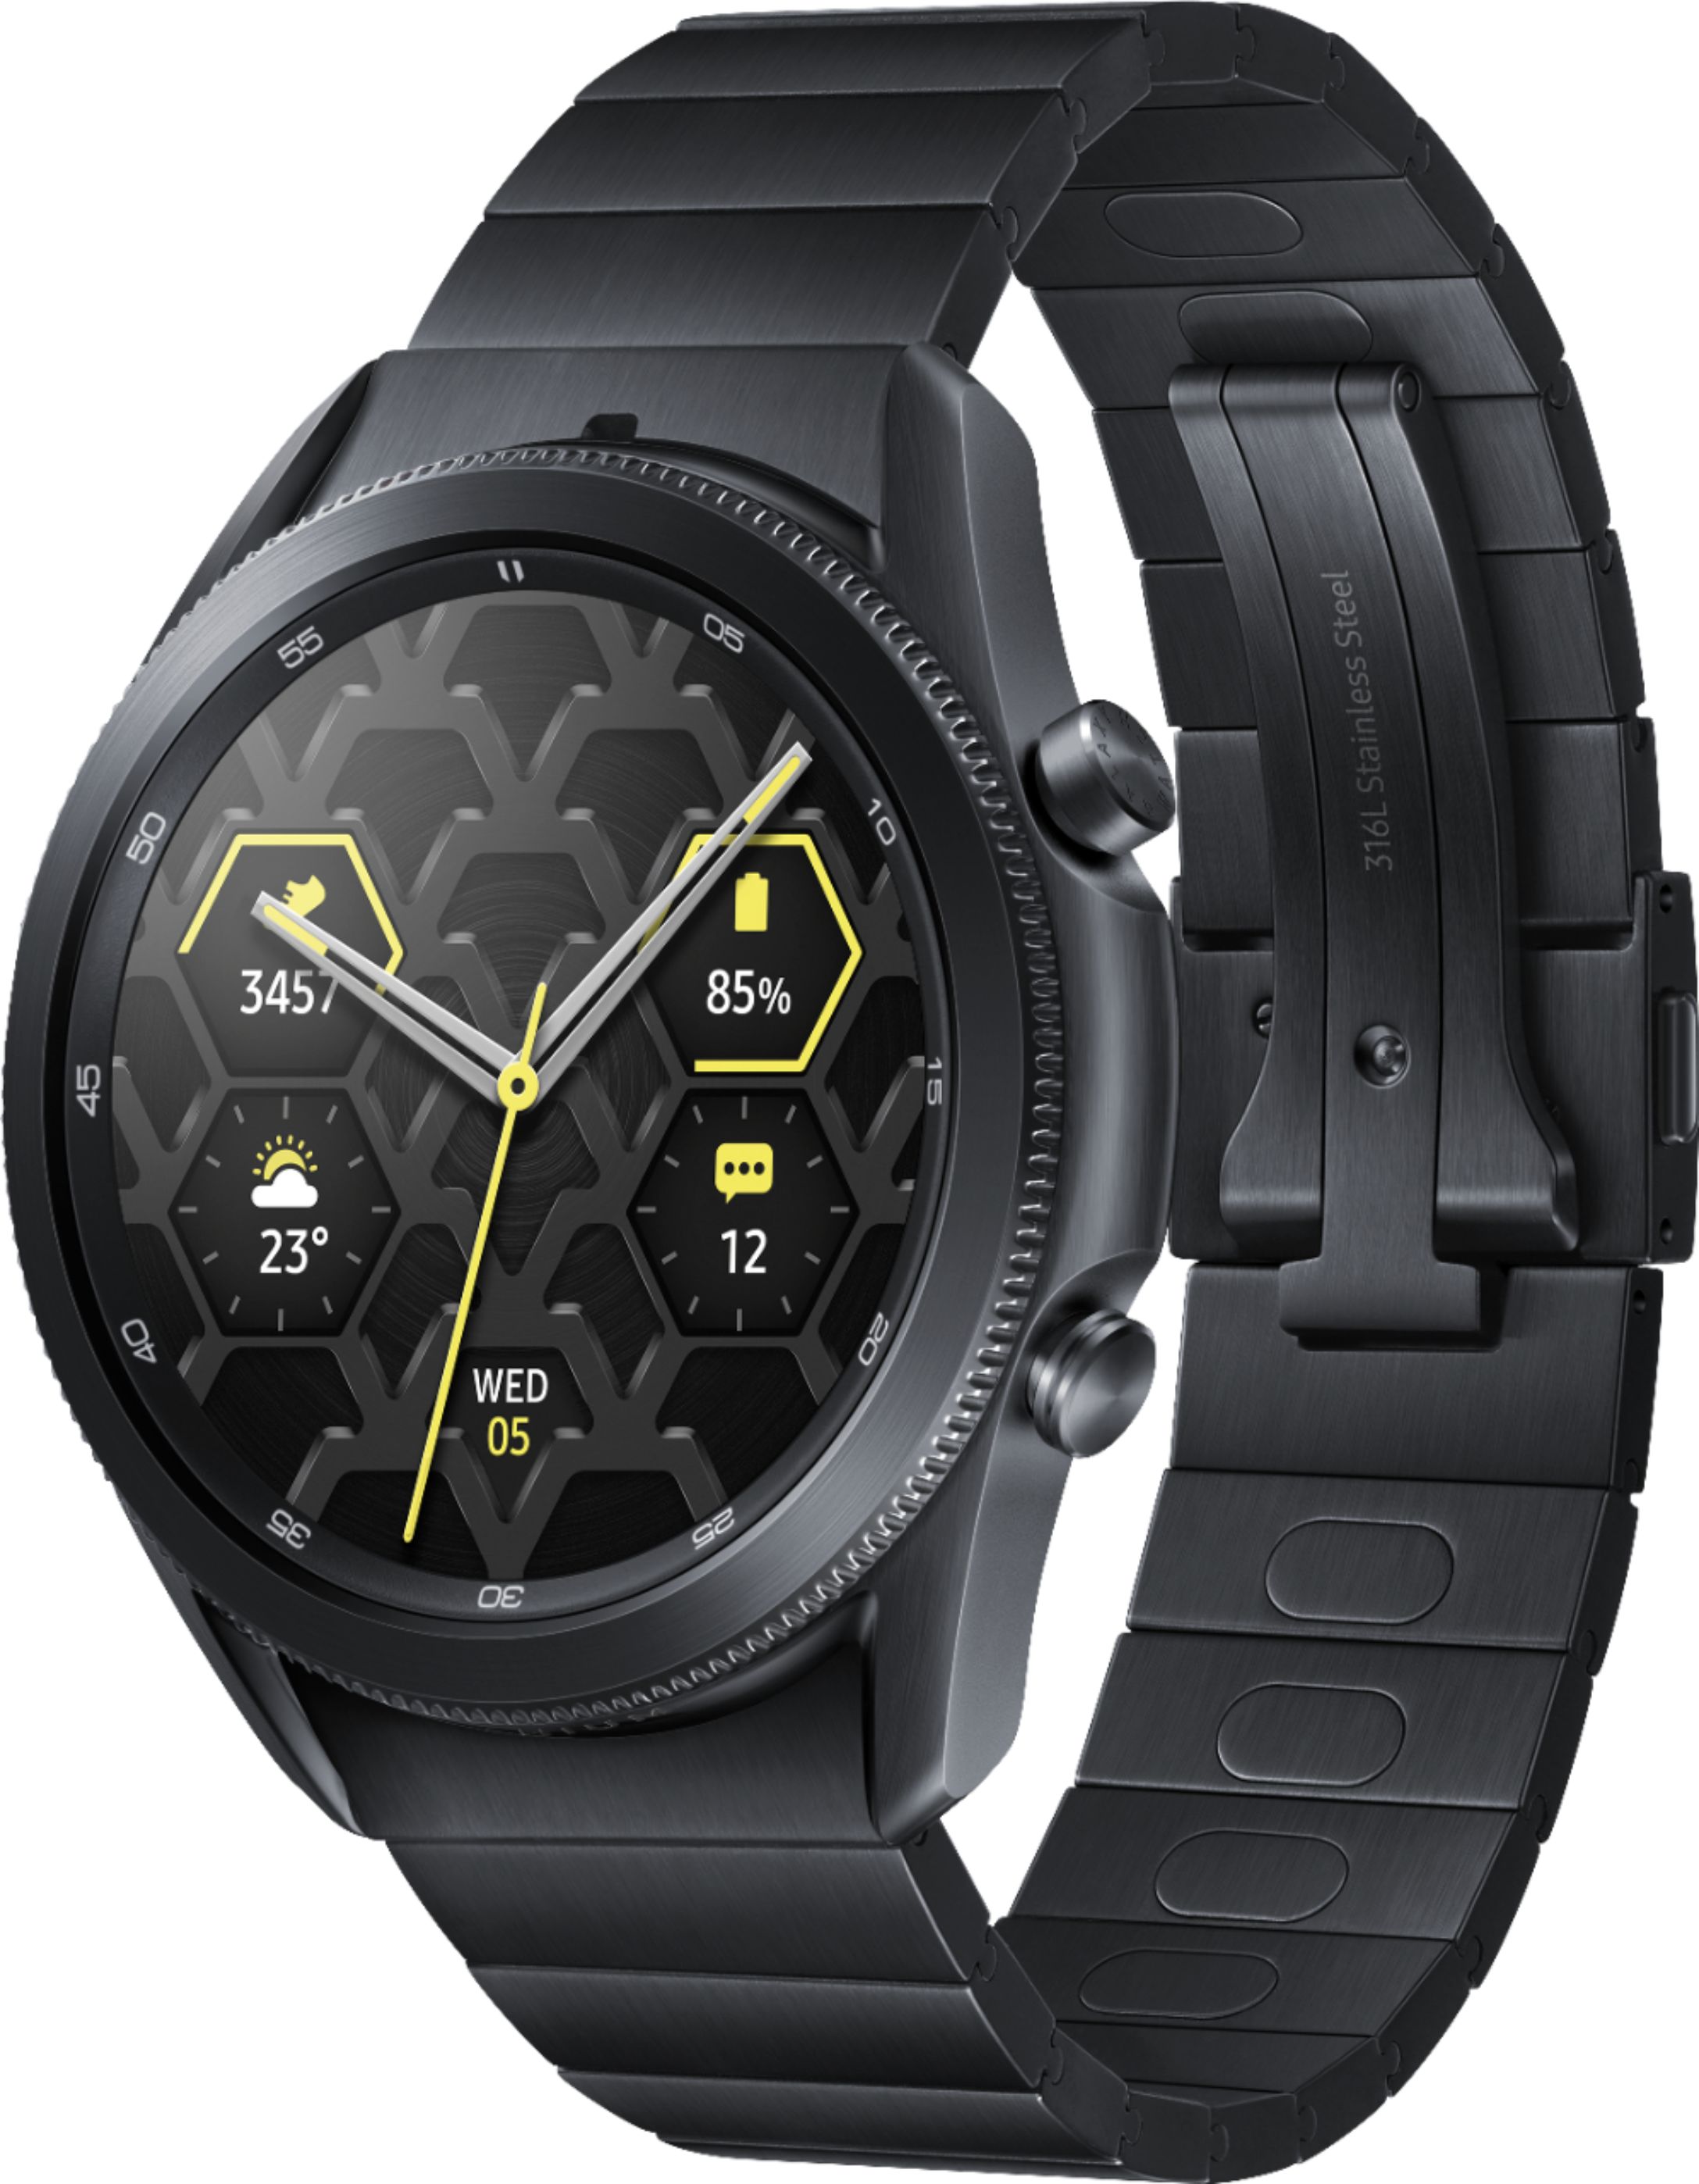 samsung galaxy smart watch 3 price